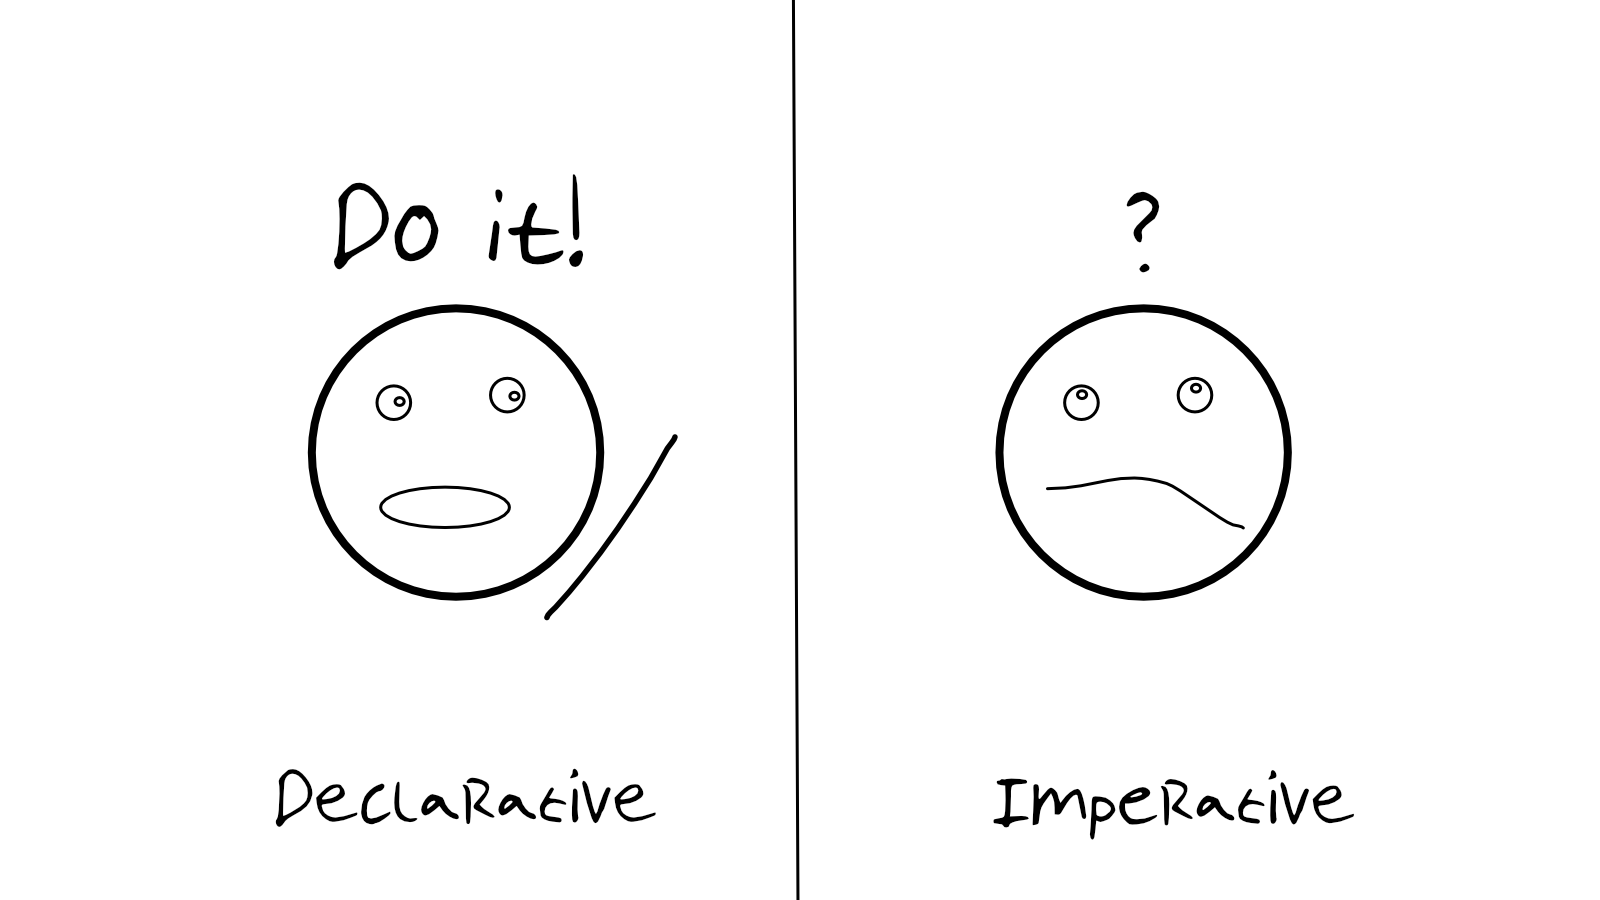 Declarative VS Imperative programming